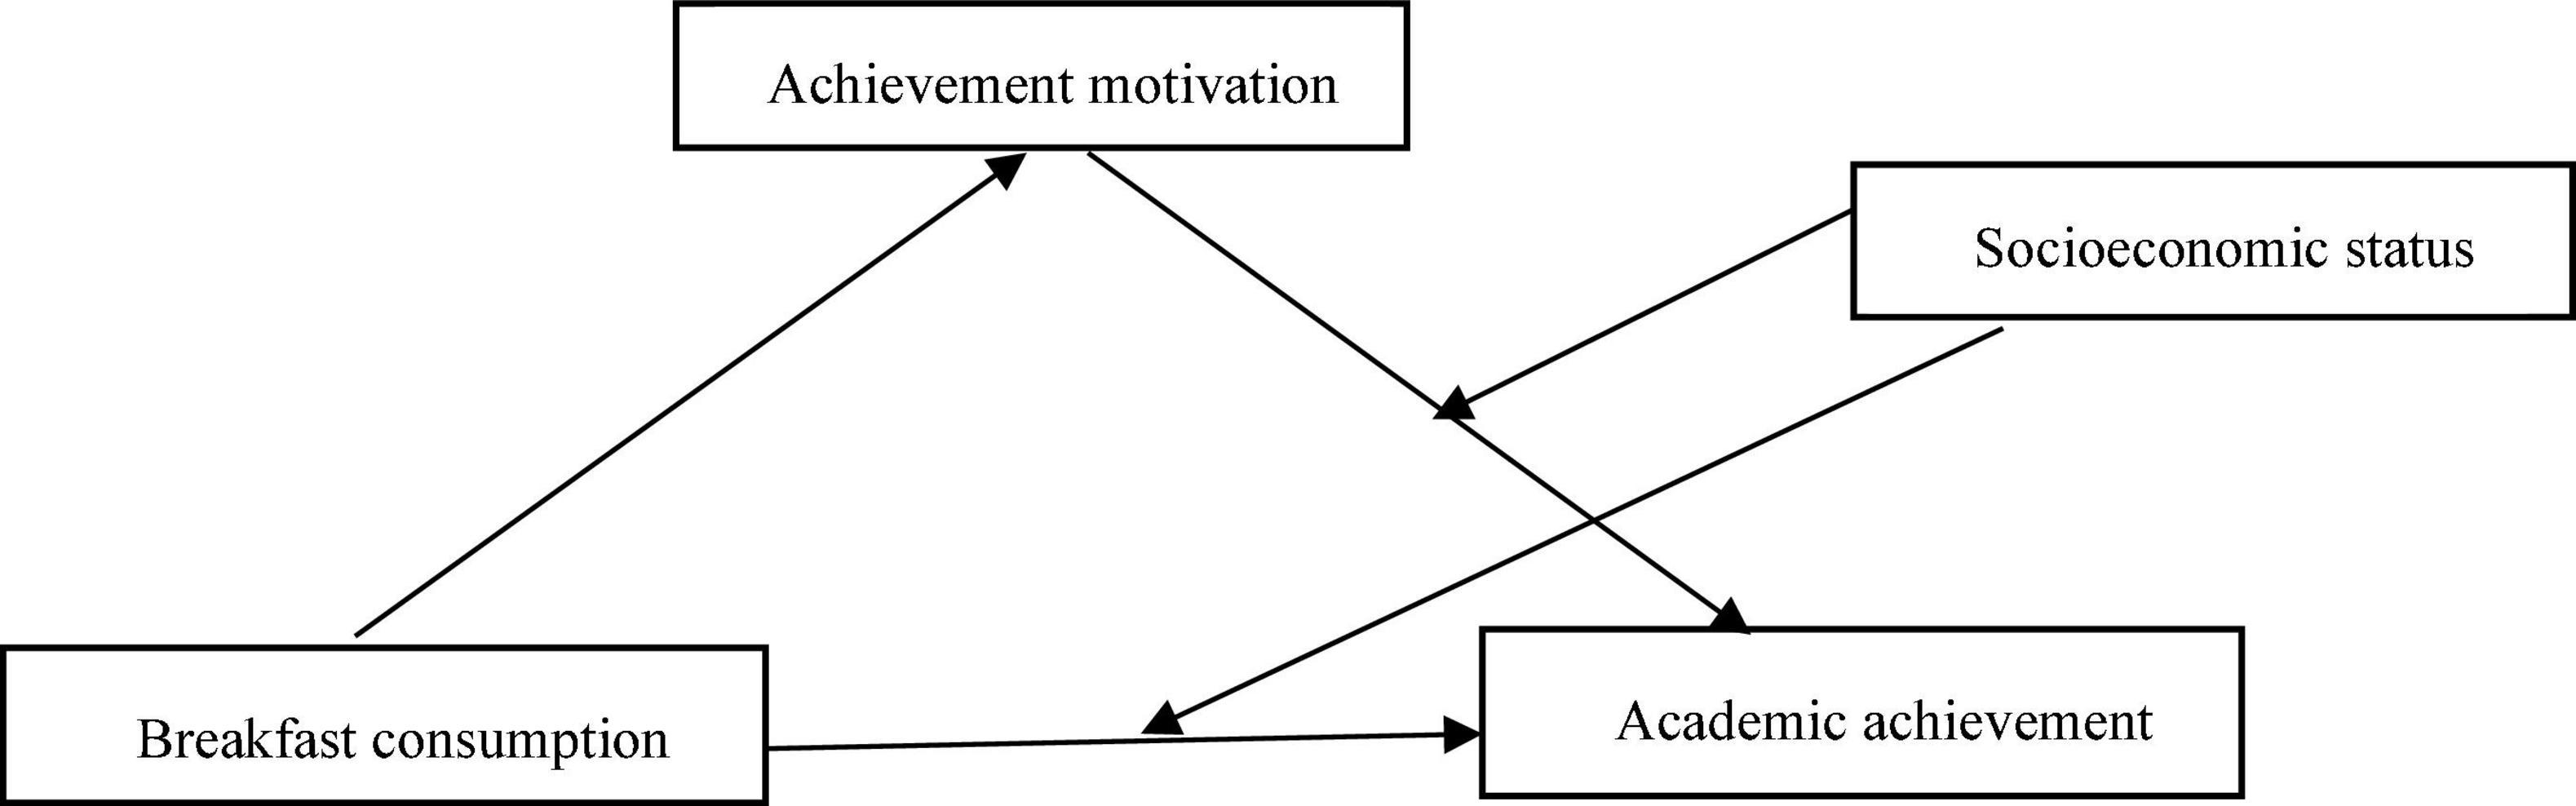 motivational factors affecting academic performance